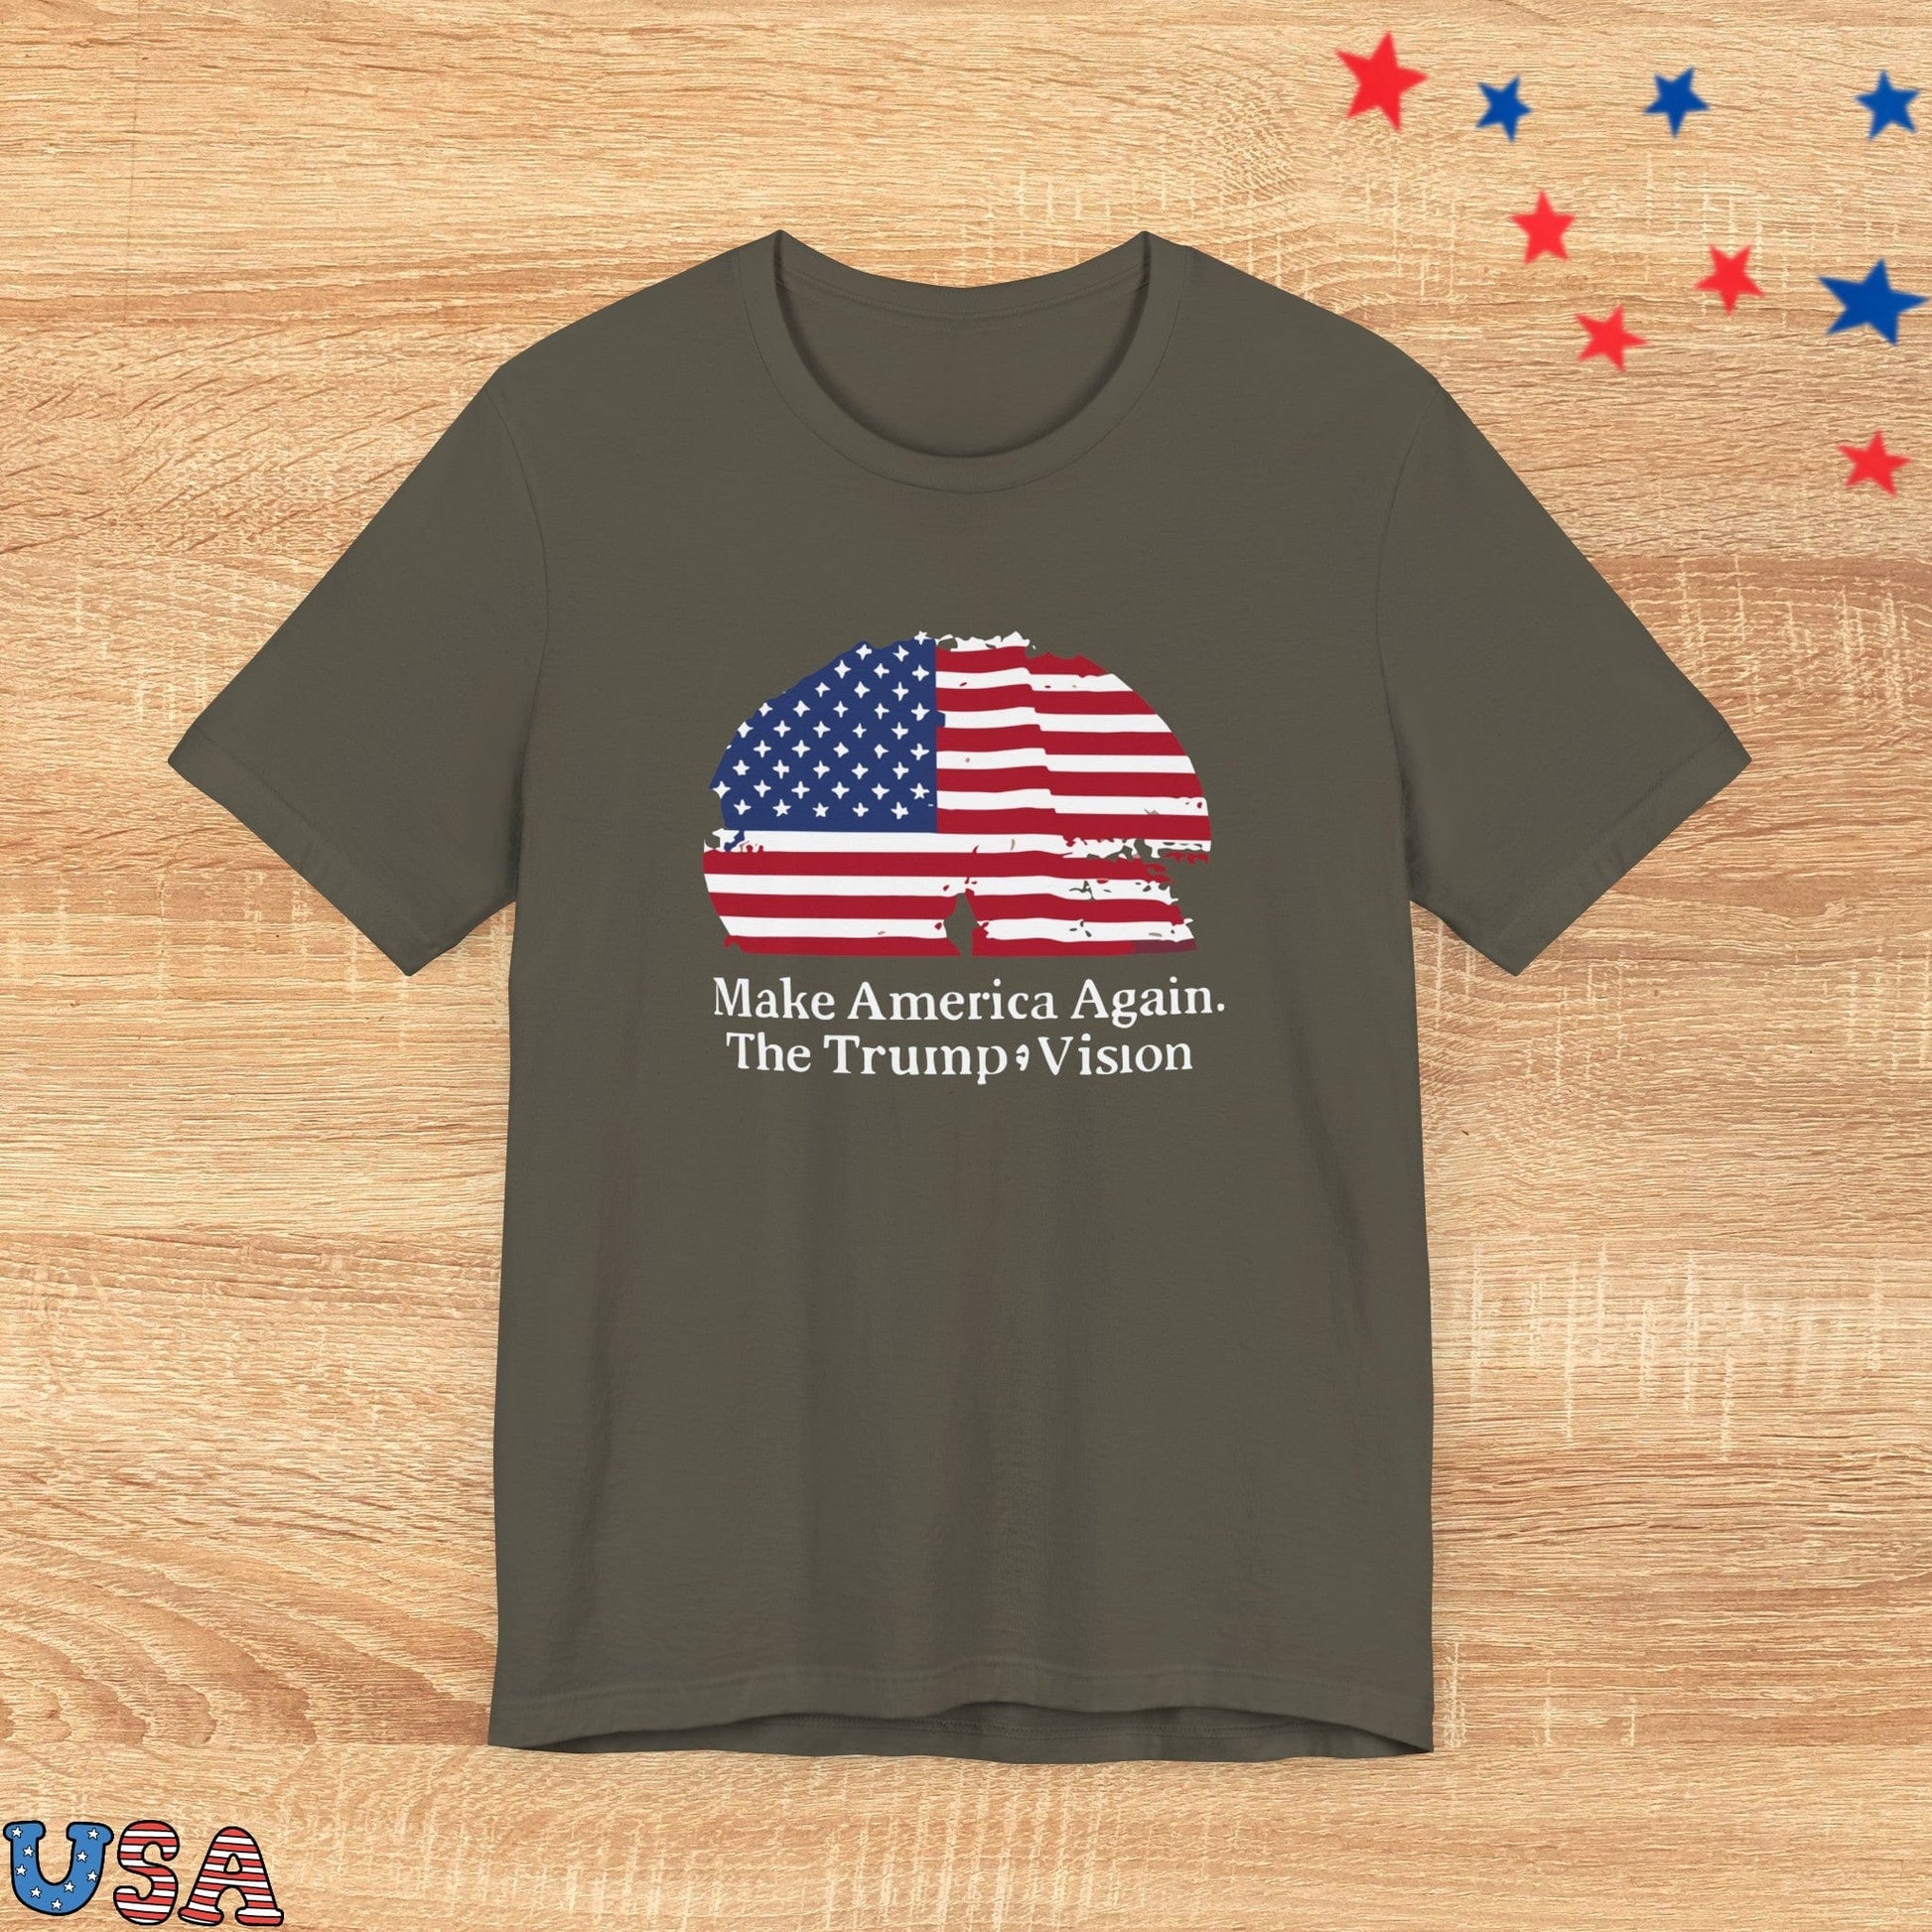 patriotic stars T-Shirt Army / XS Make America Again! The Trump Vision